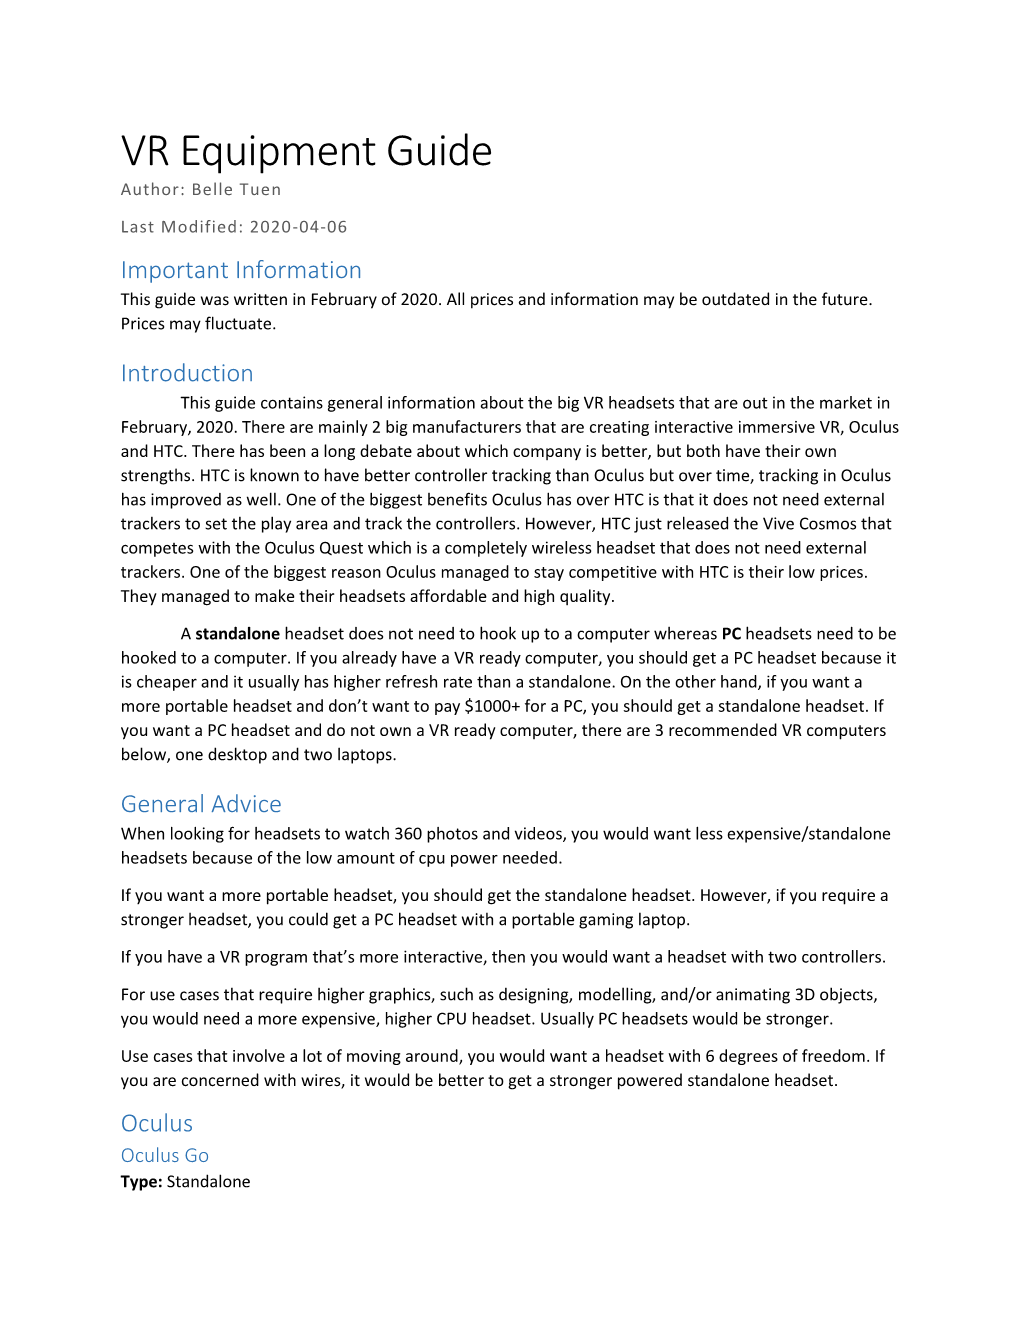 VR Equipment Guide (PDF)